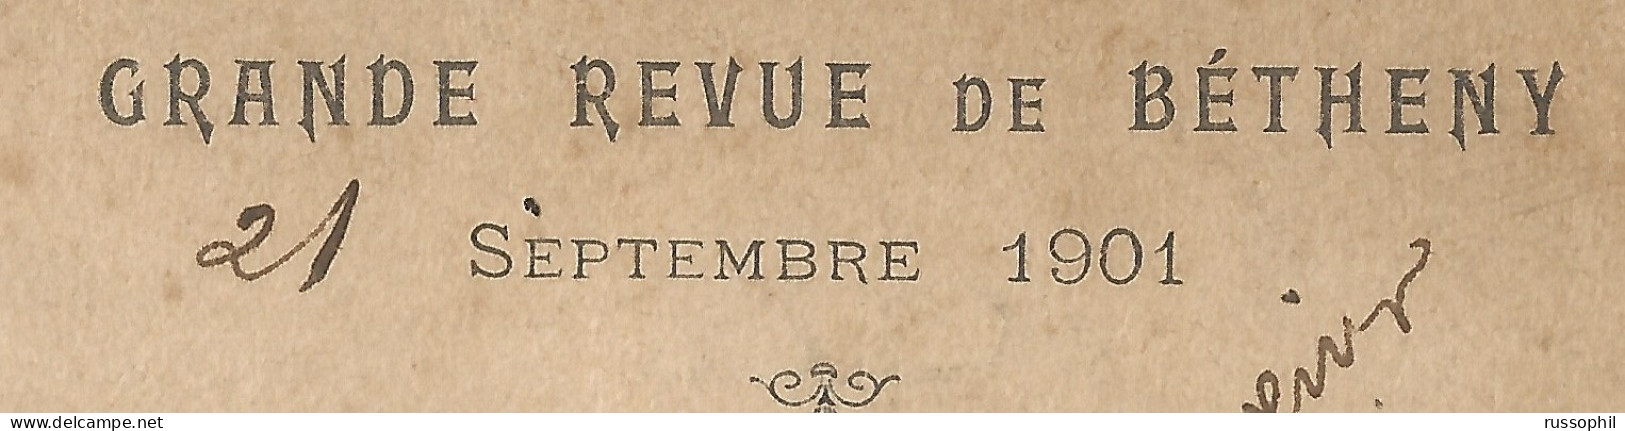 FRANCO RUSSIAN ALLIANCE - GRANDE REVUE DE BETHENY - 21 SEPTEMBRE 1901 - VUE DE BETHENY, PRES REIMS - 1901 - Eventos